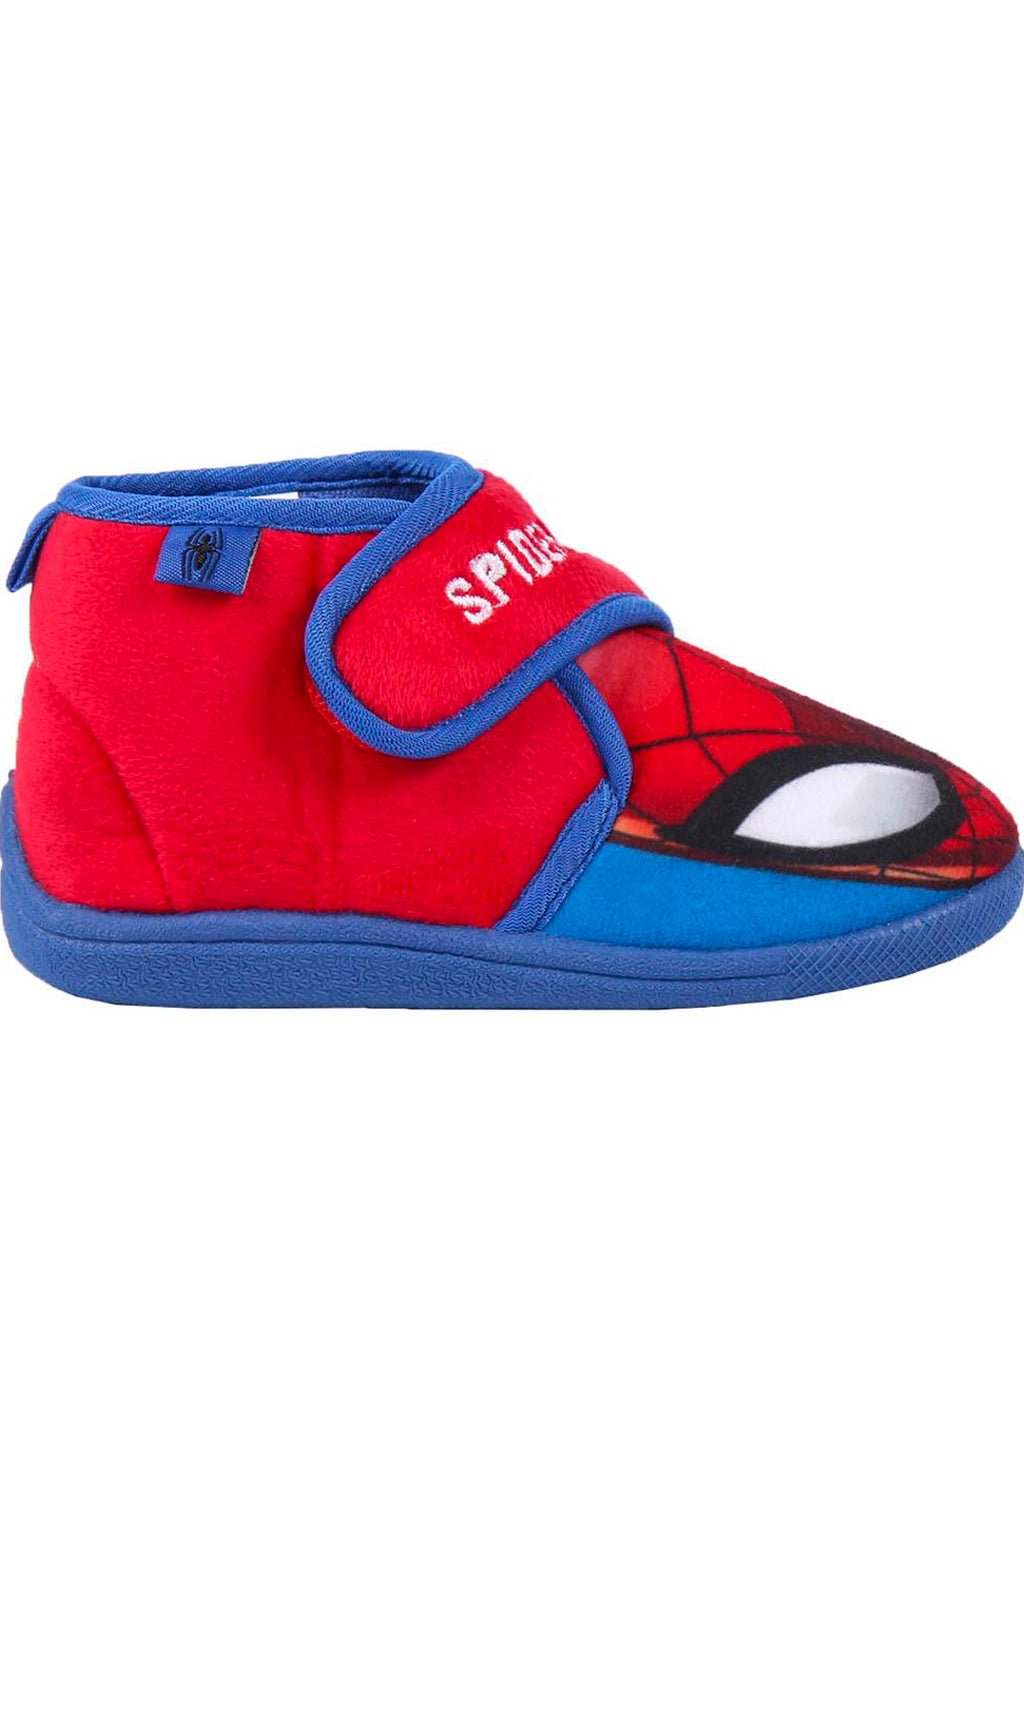 Zapatillas de Casa Spiderman™ infantil I Don Disfraz